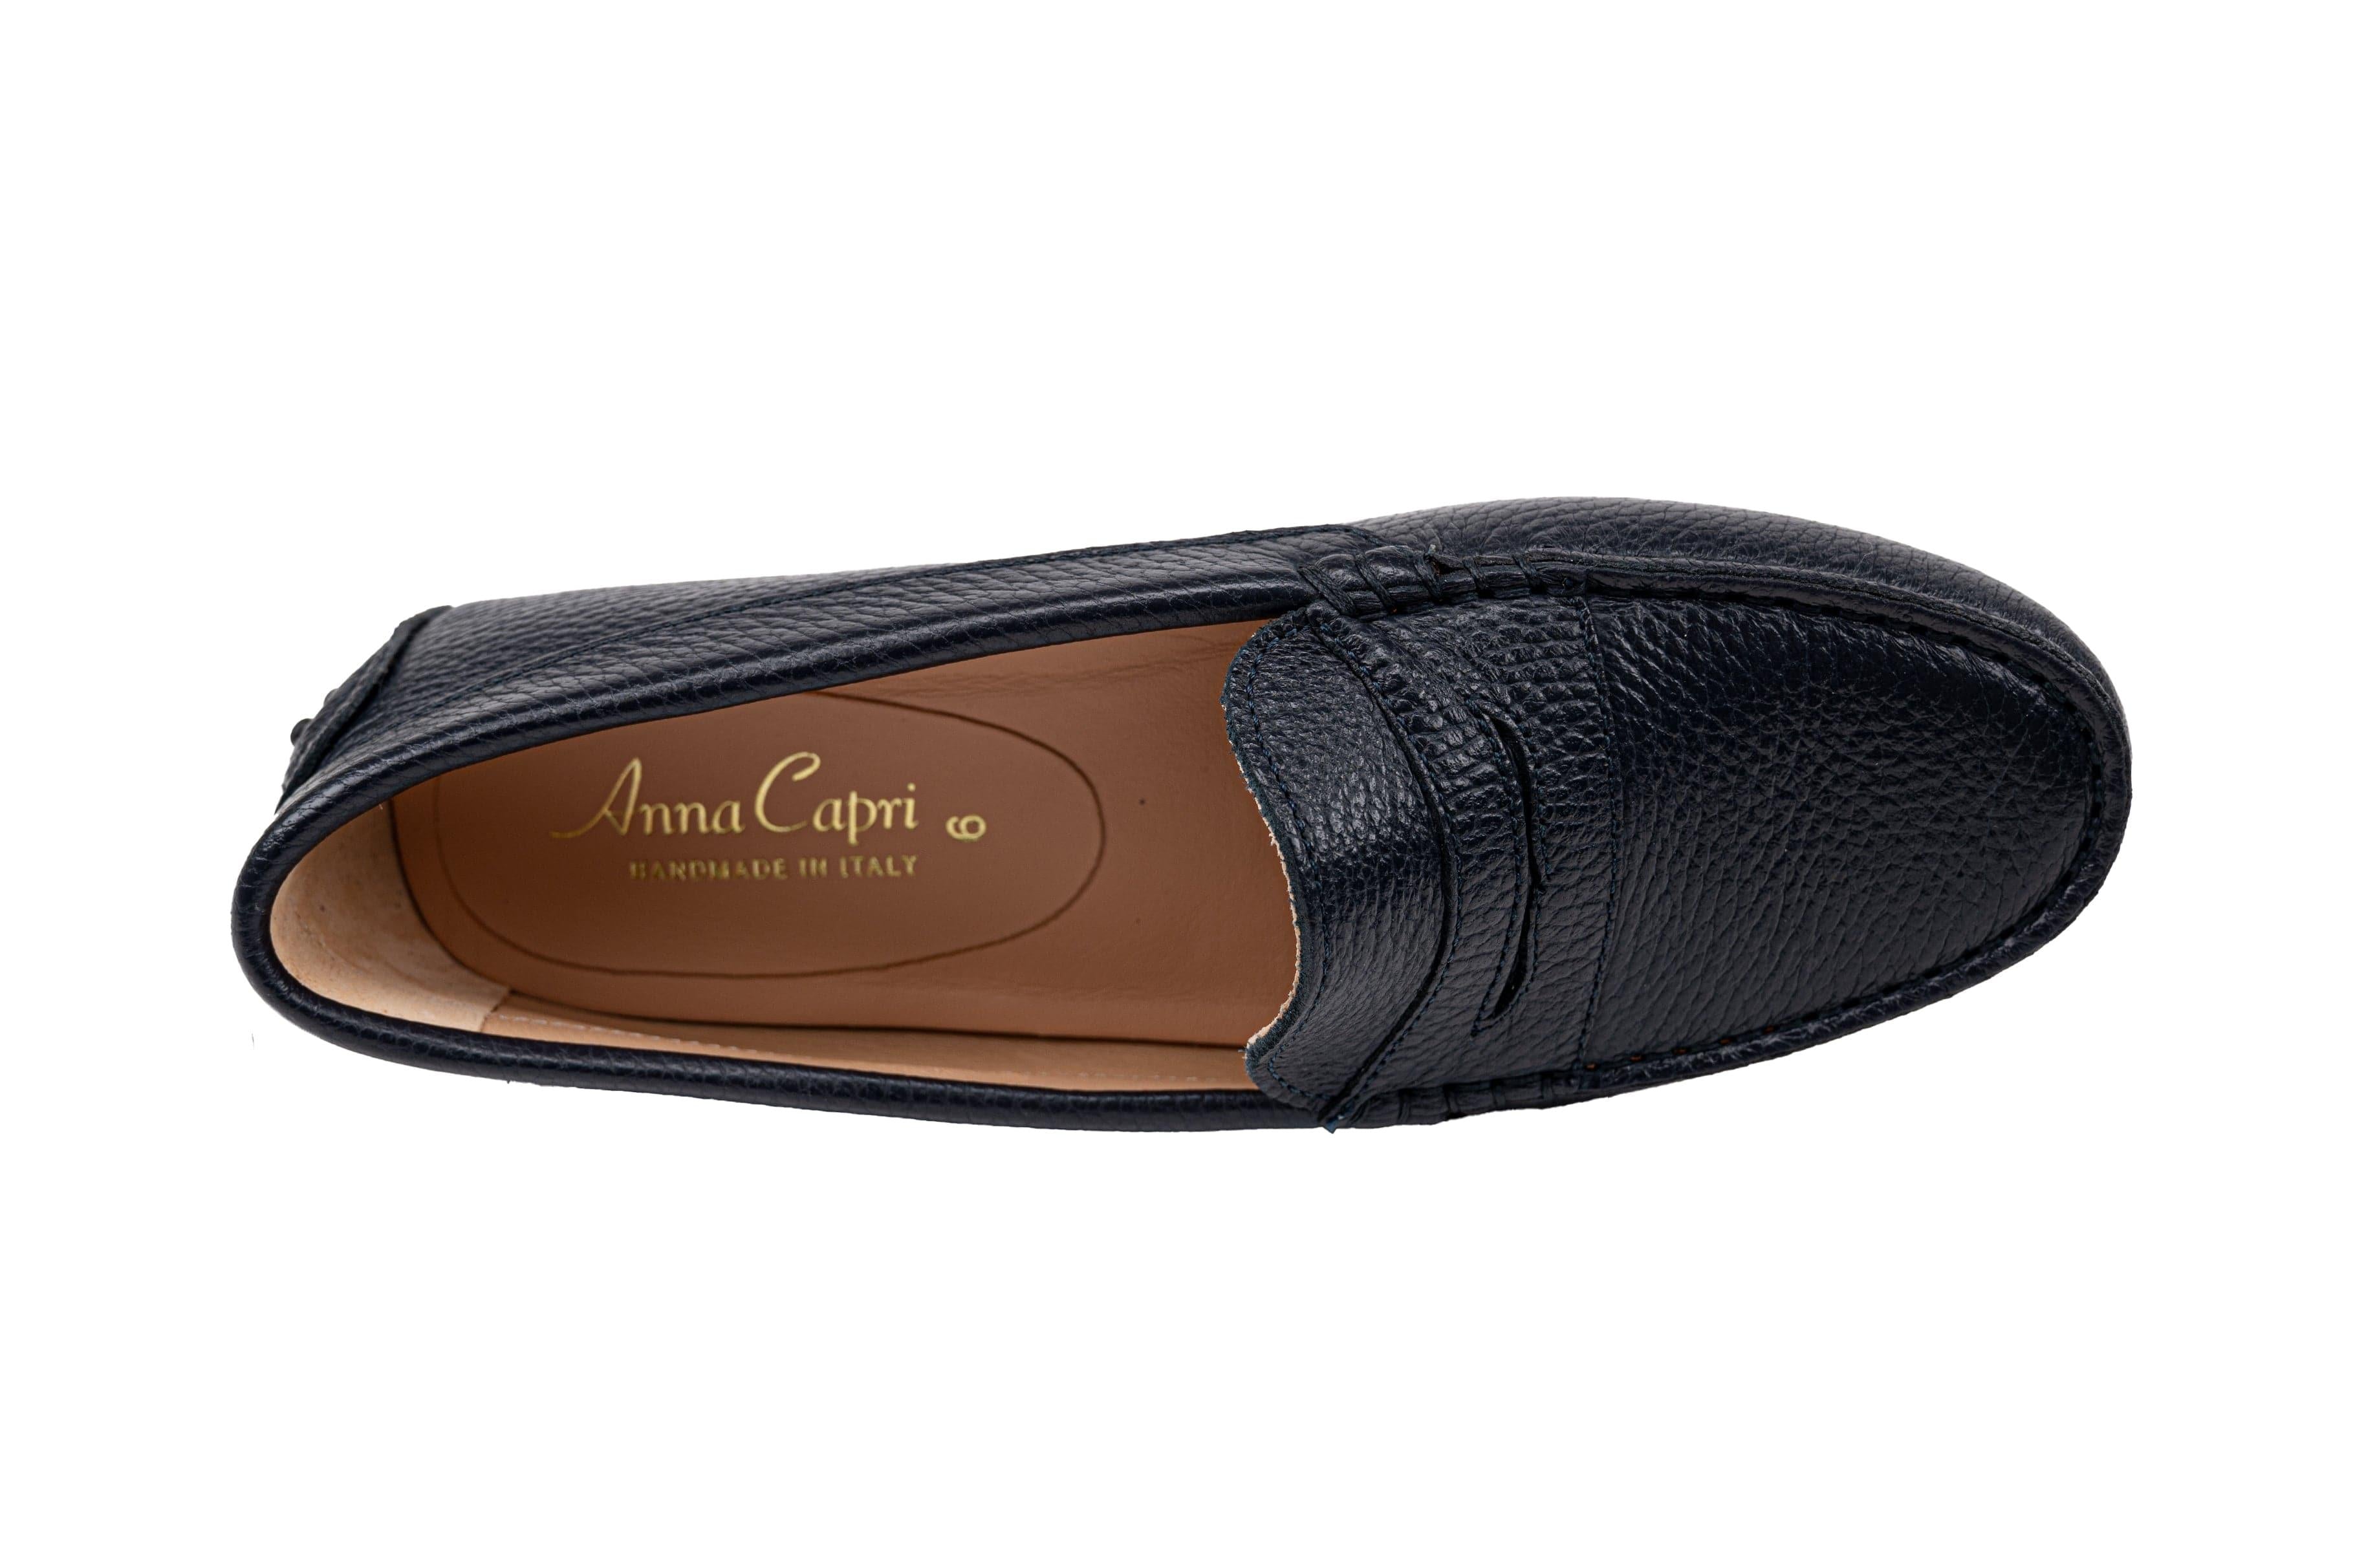 Dulce - Italian Leather Moccasin - Italian Shoemakers